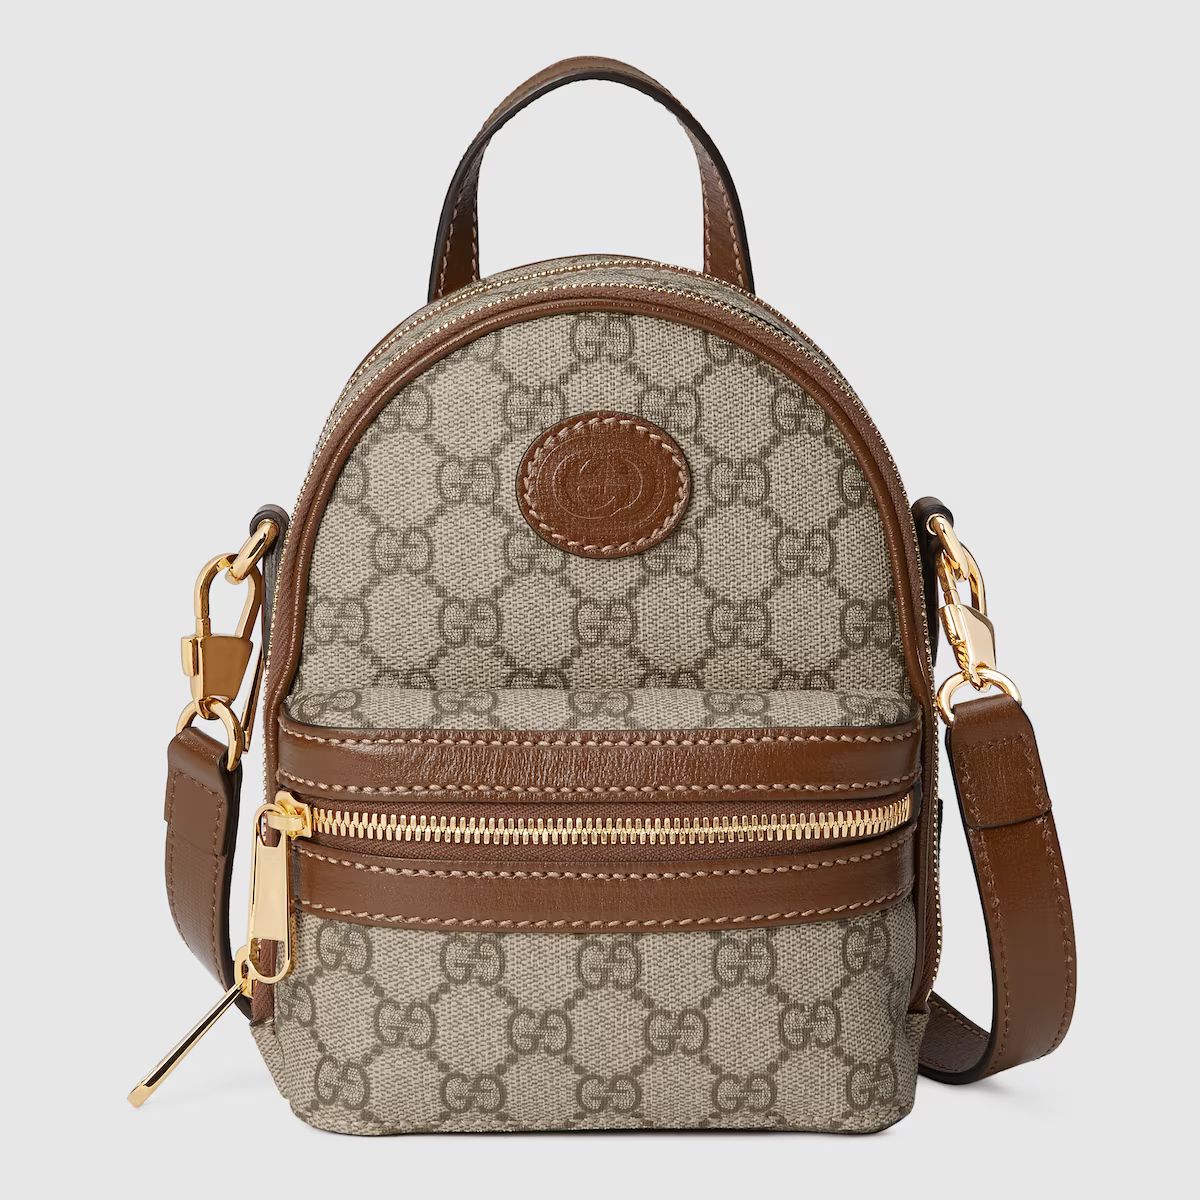 Multi-function bag with Interlocking G | Gucci (US)